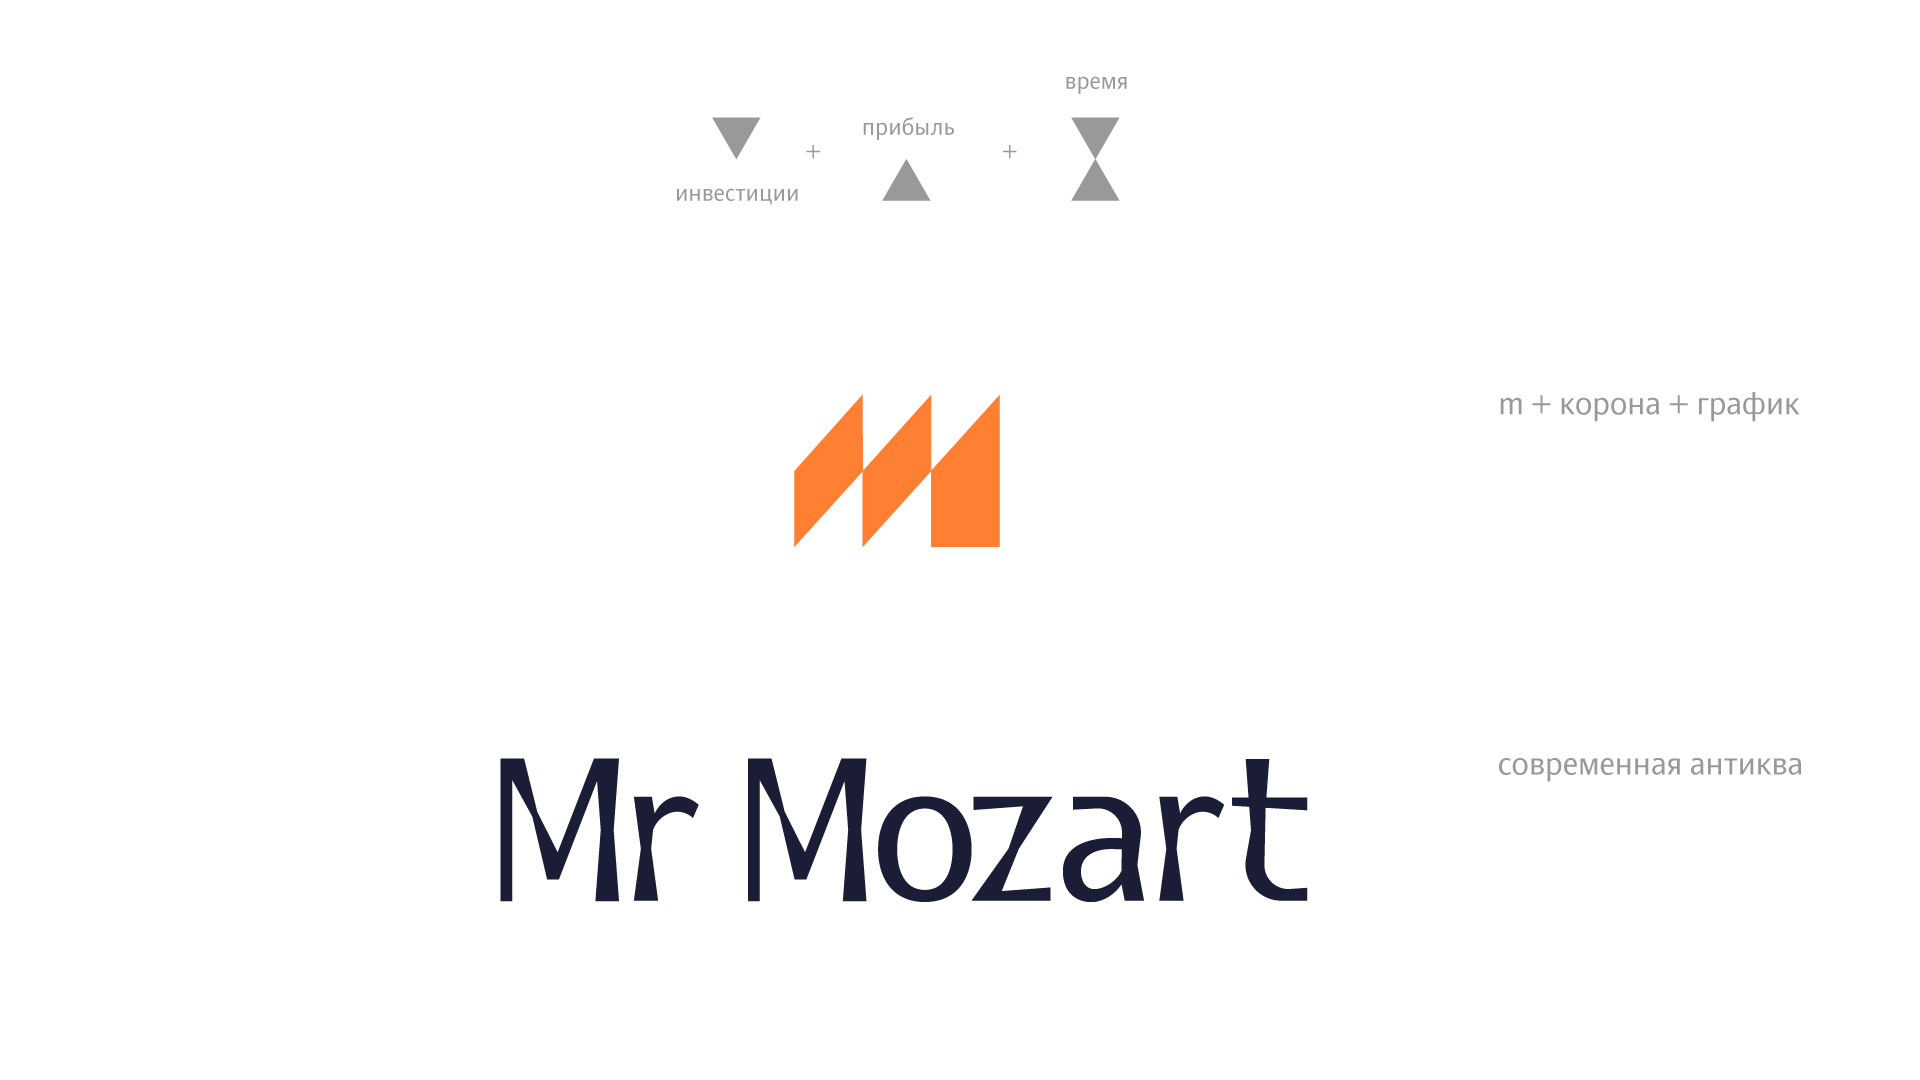 Mr mozart. Мистер Моцарт.